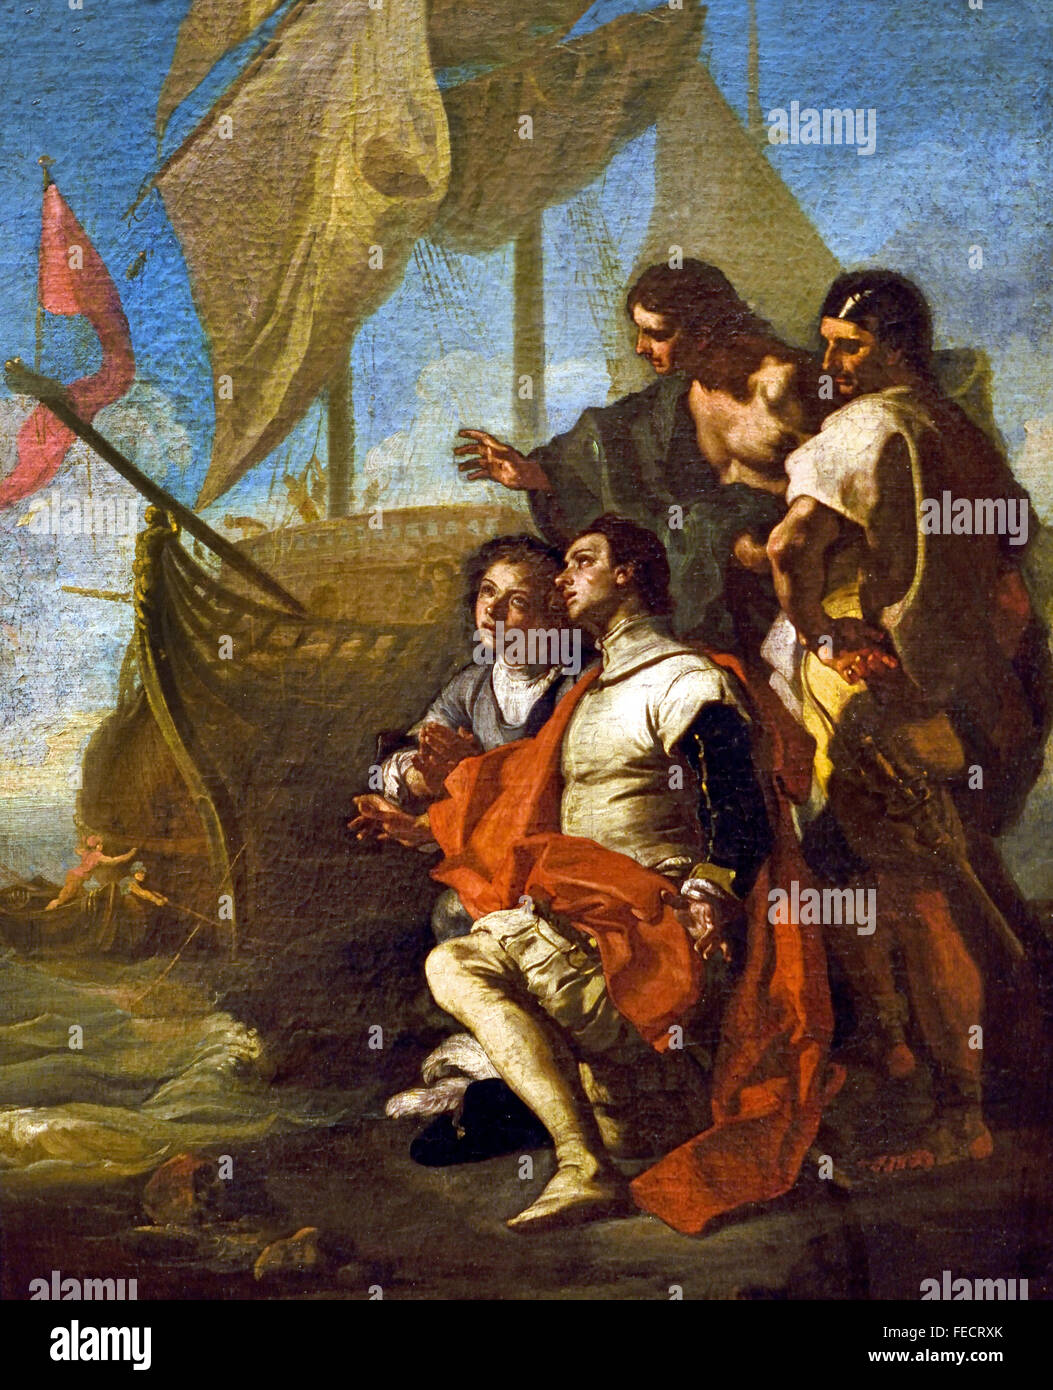 Christopher Columbus Ankunft in Amerika 1715 Francesco Solimena 1657-1747 Spanien Spanisch (Christopher Columbus 1450-1451 Genua Italien italienische Explorer, Navigator, Kolonisator und Bürger der Republik von Genua) Segeln Schiff Santa Maria Stockfoto